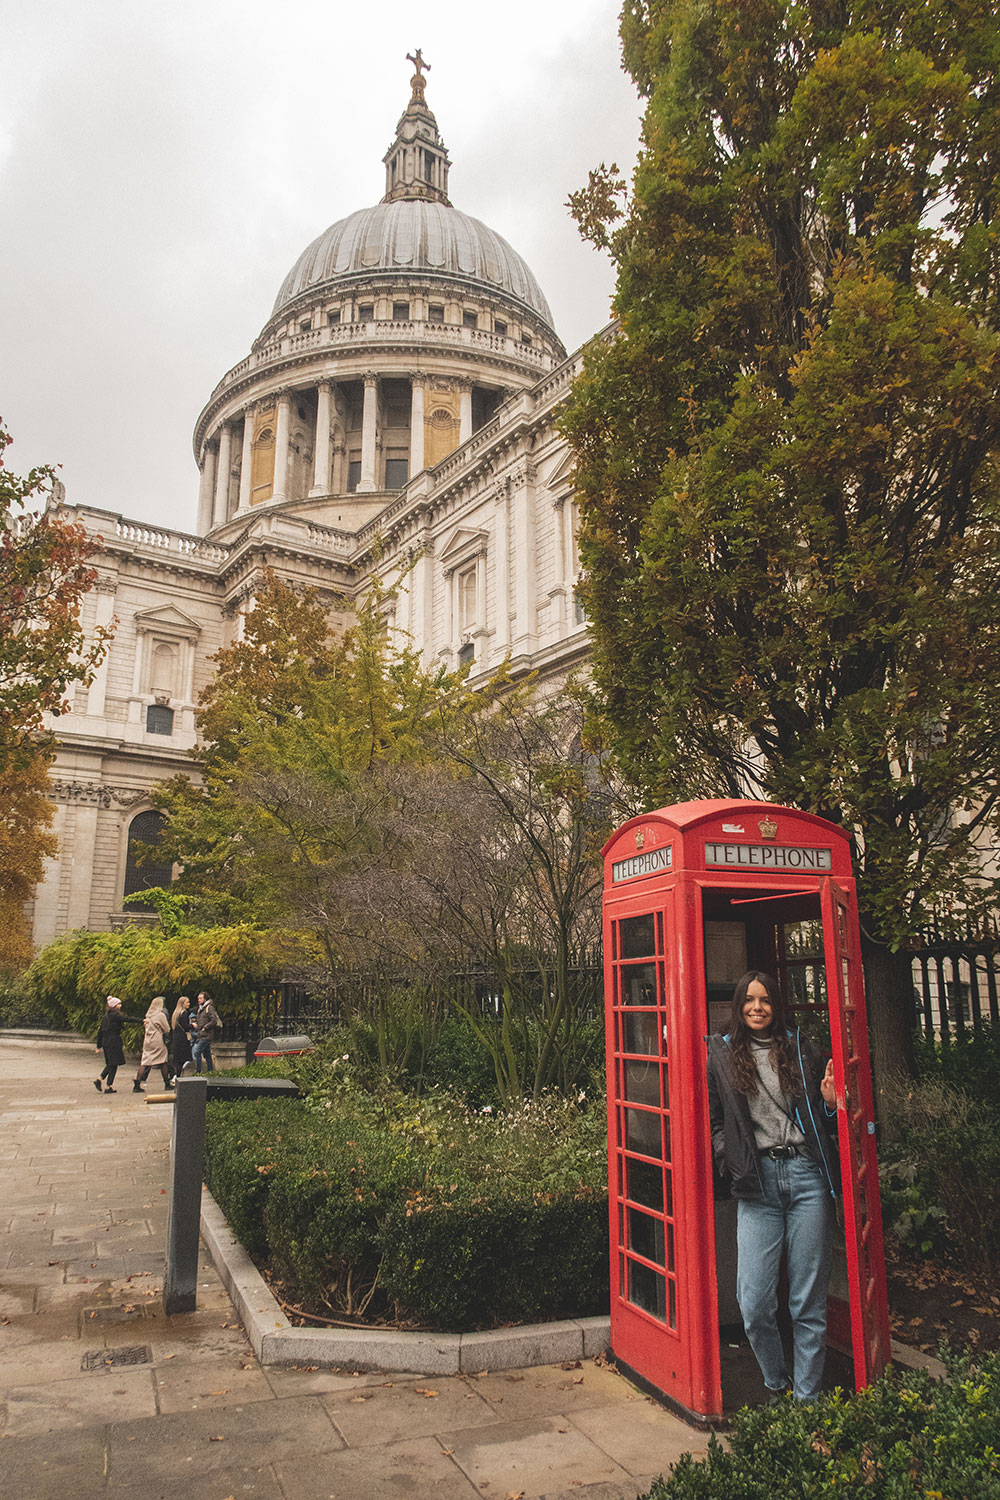 Onde tirar fotos legais em Londres - St Paul’s Cathedral